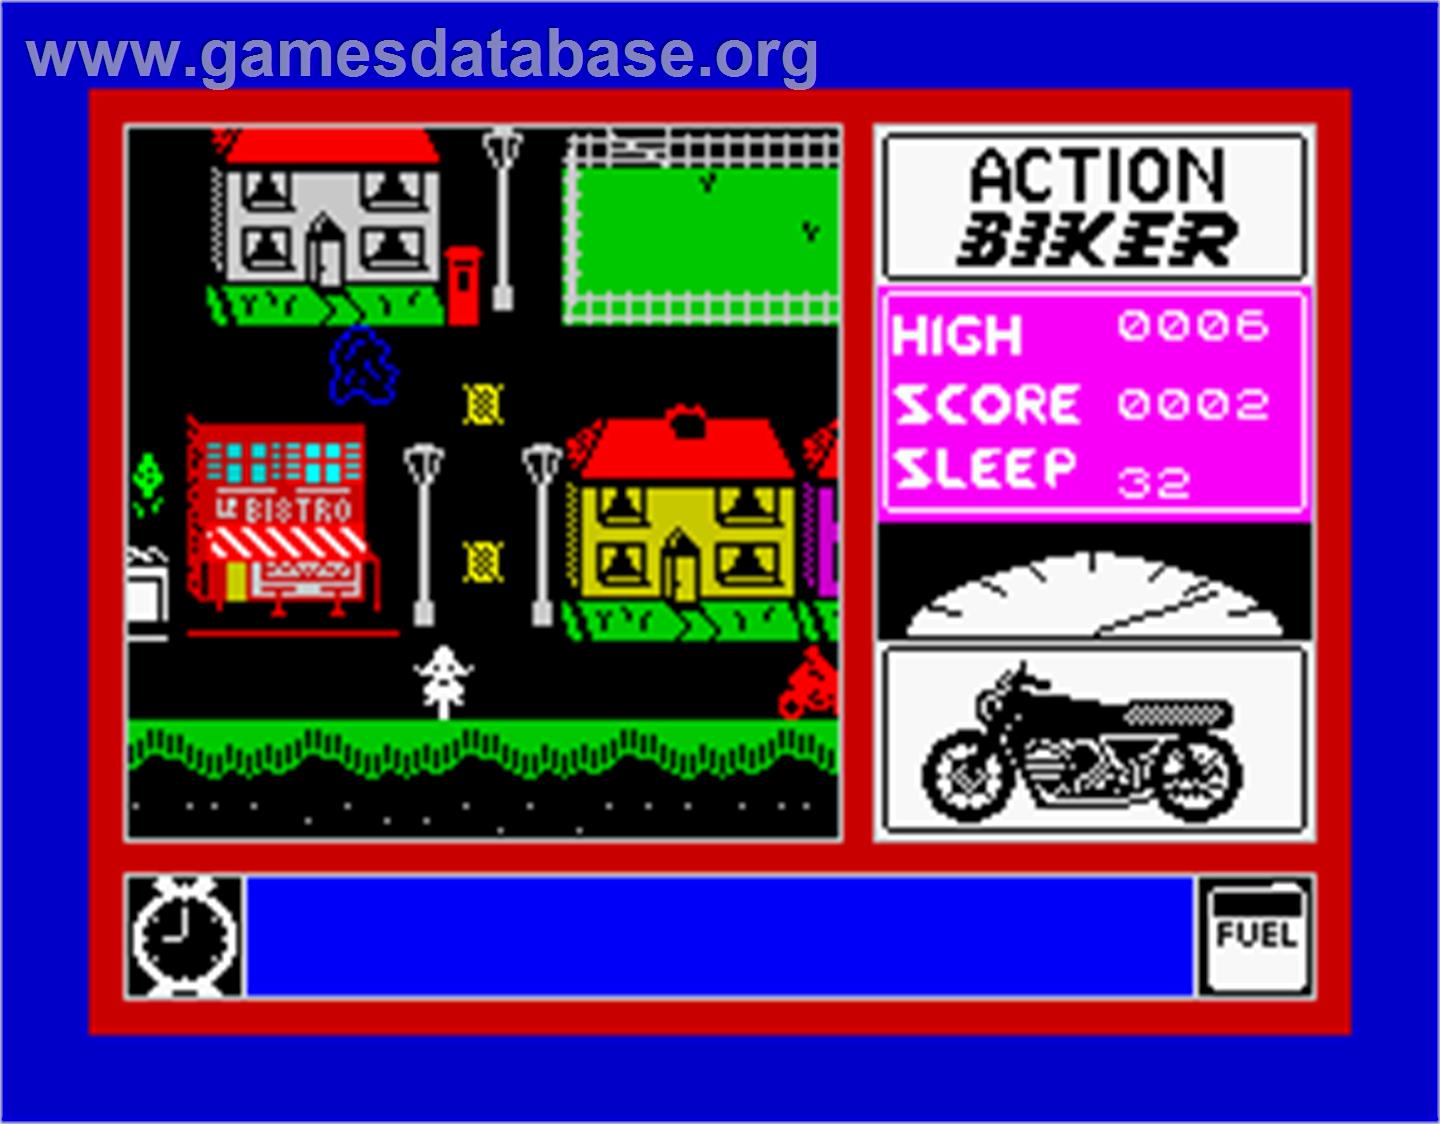 Action Biker - Sinclair ZX Spectrum - Artwork - In Game